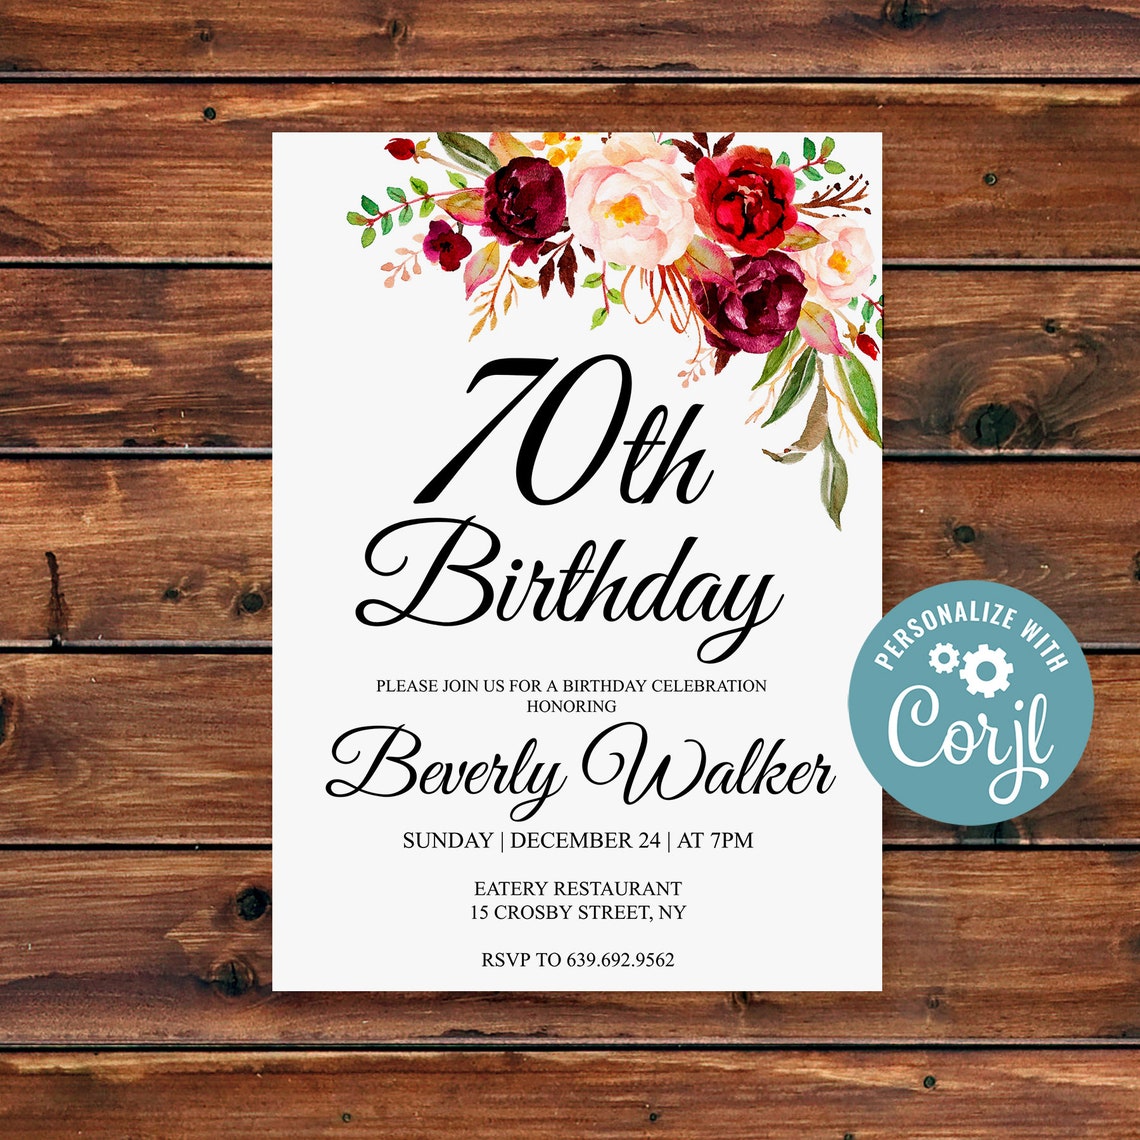 invitations-70th-birthday-party-templates